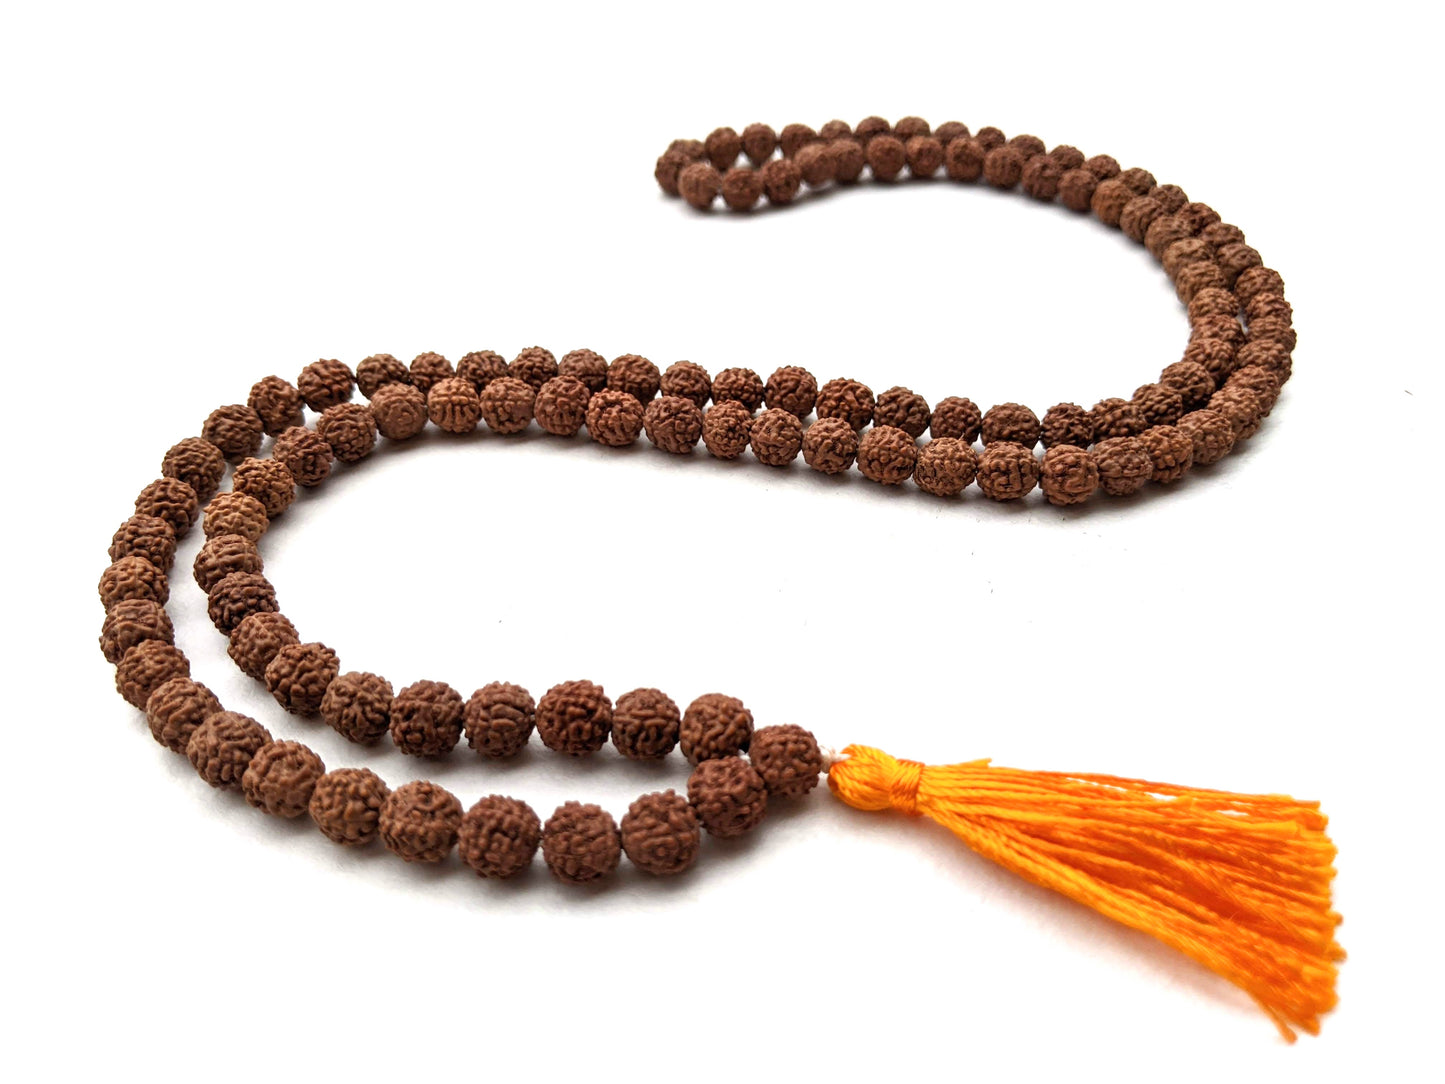 Rudraksha Mala Prayer Beads - Yellow Tassel